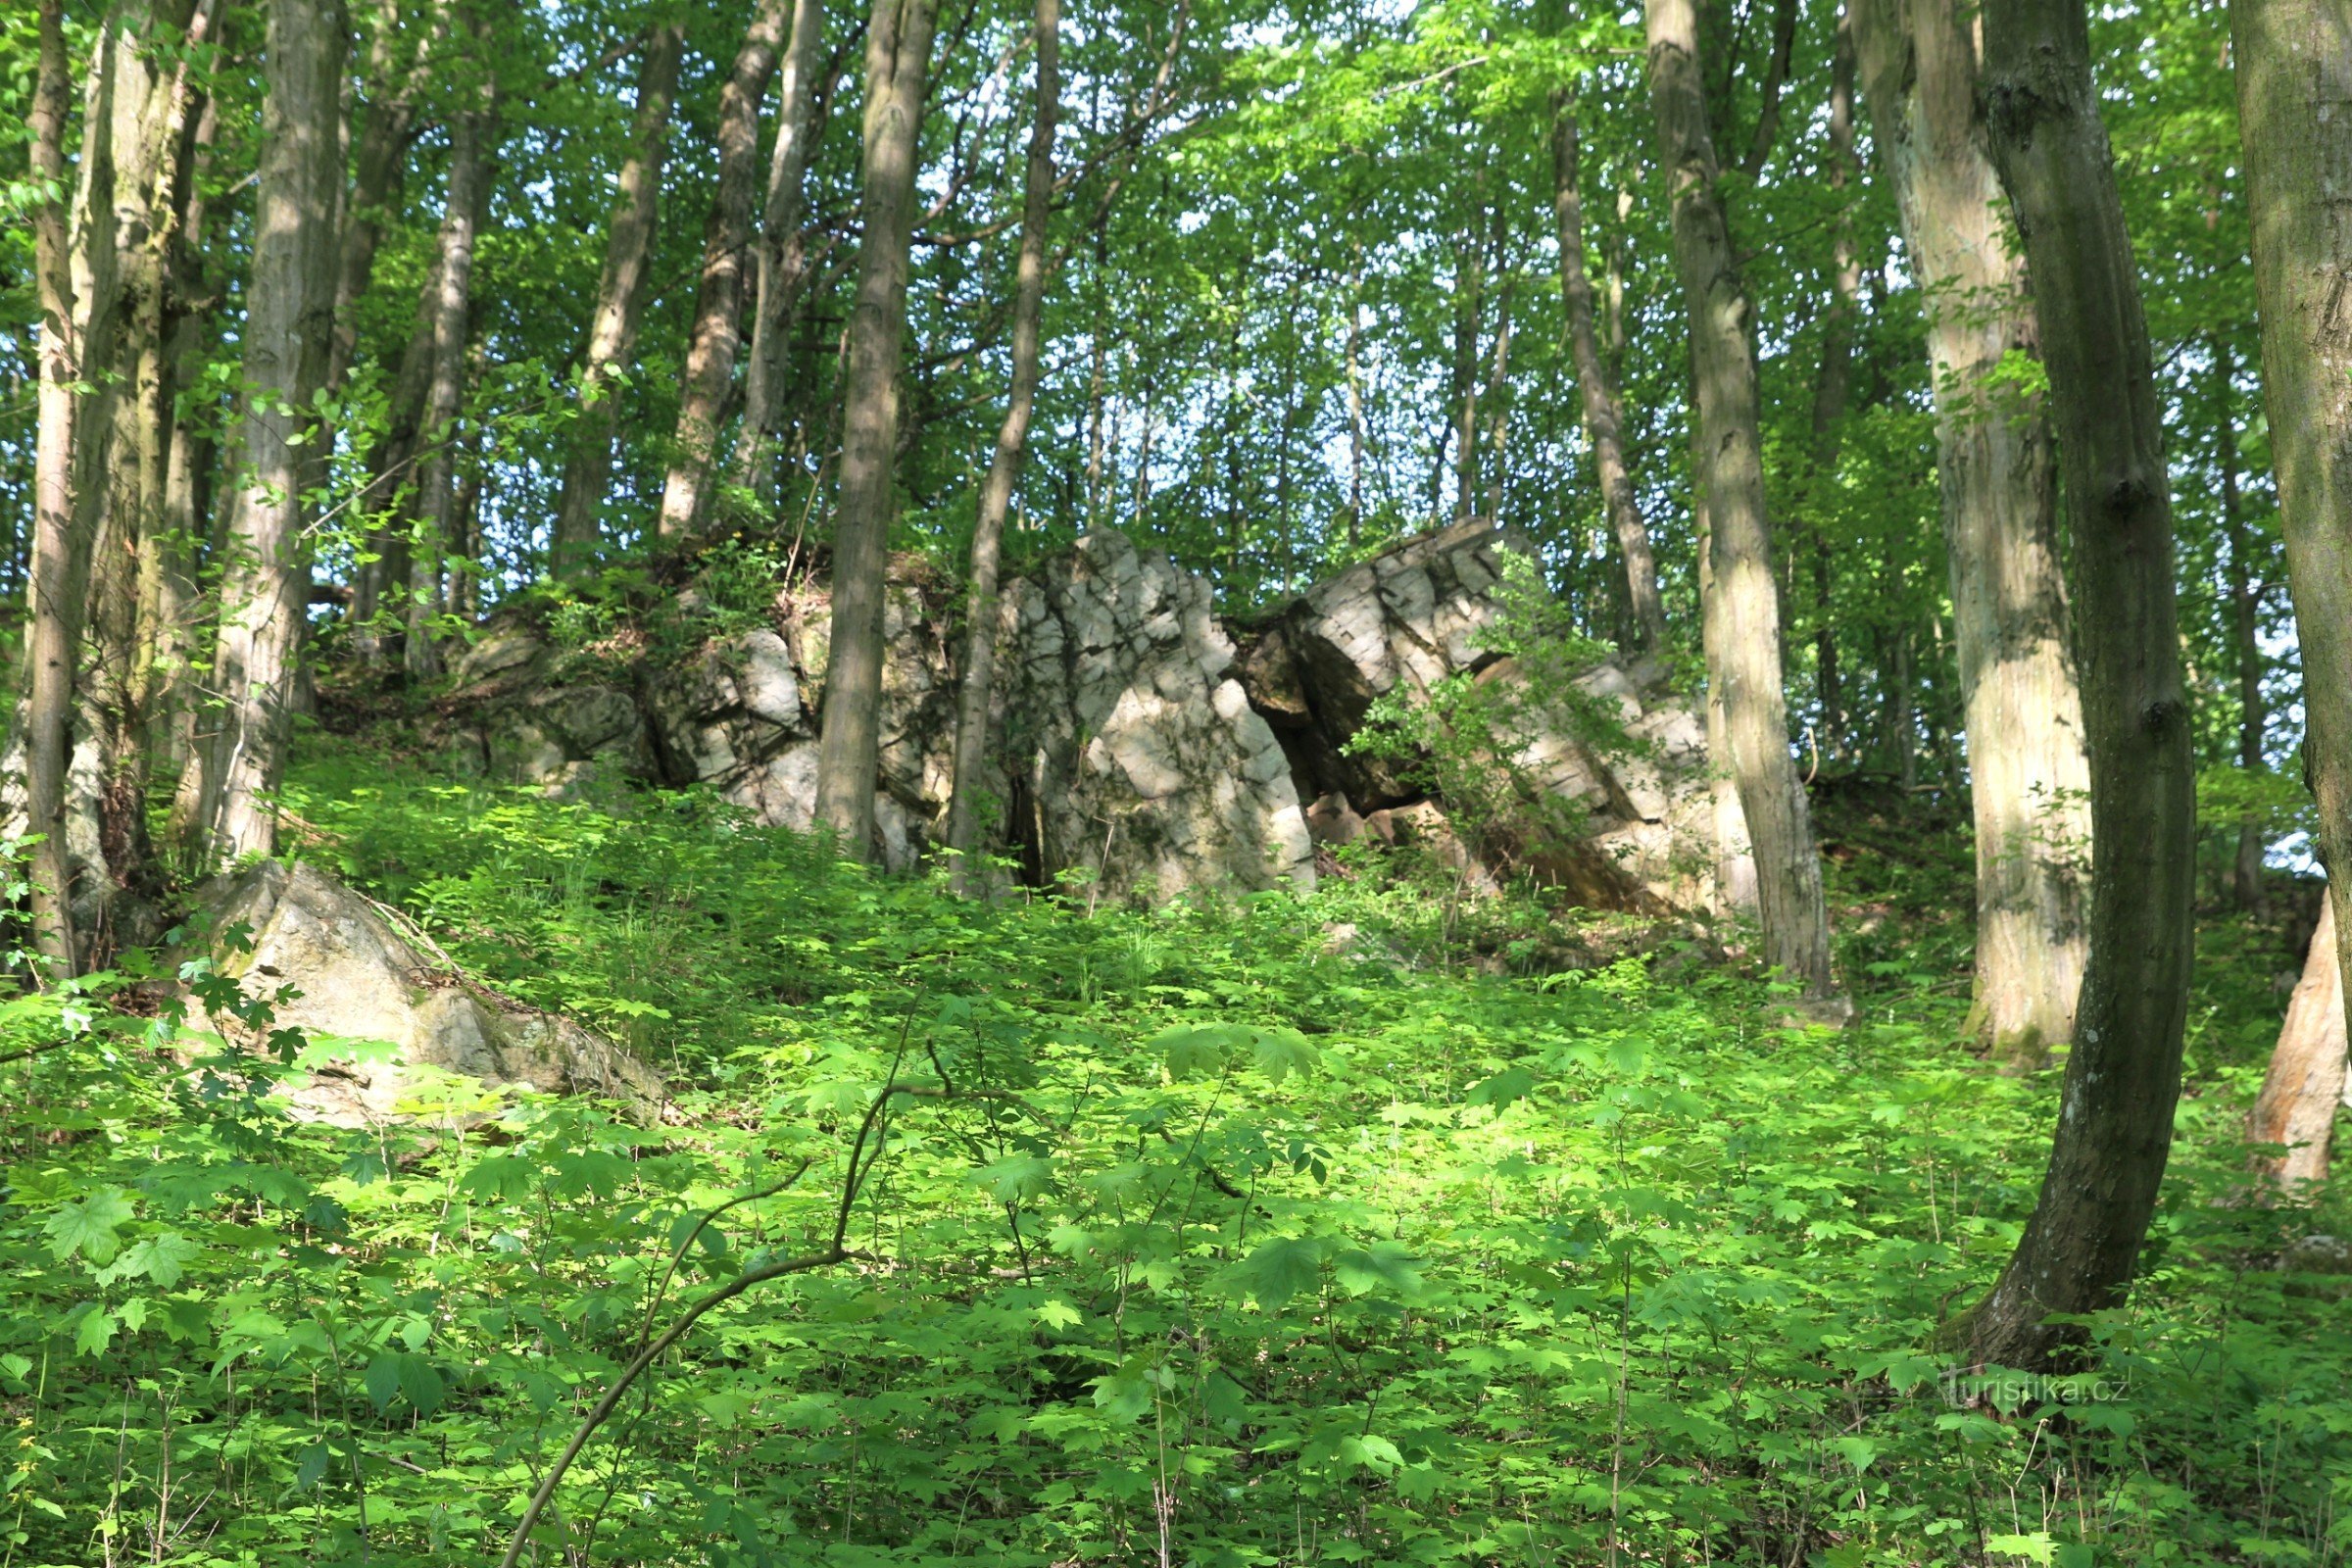 Rock outcrops of quartz near Falcov